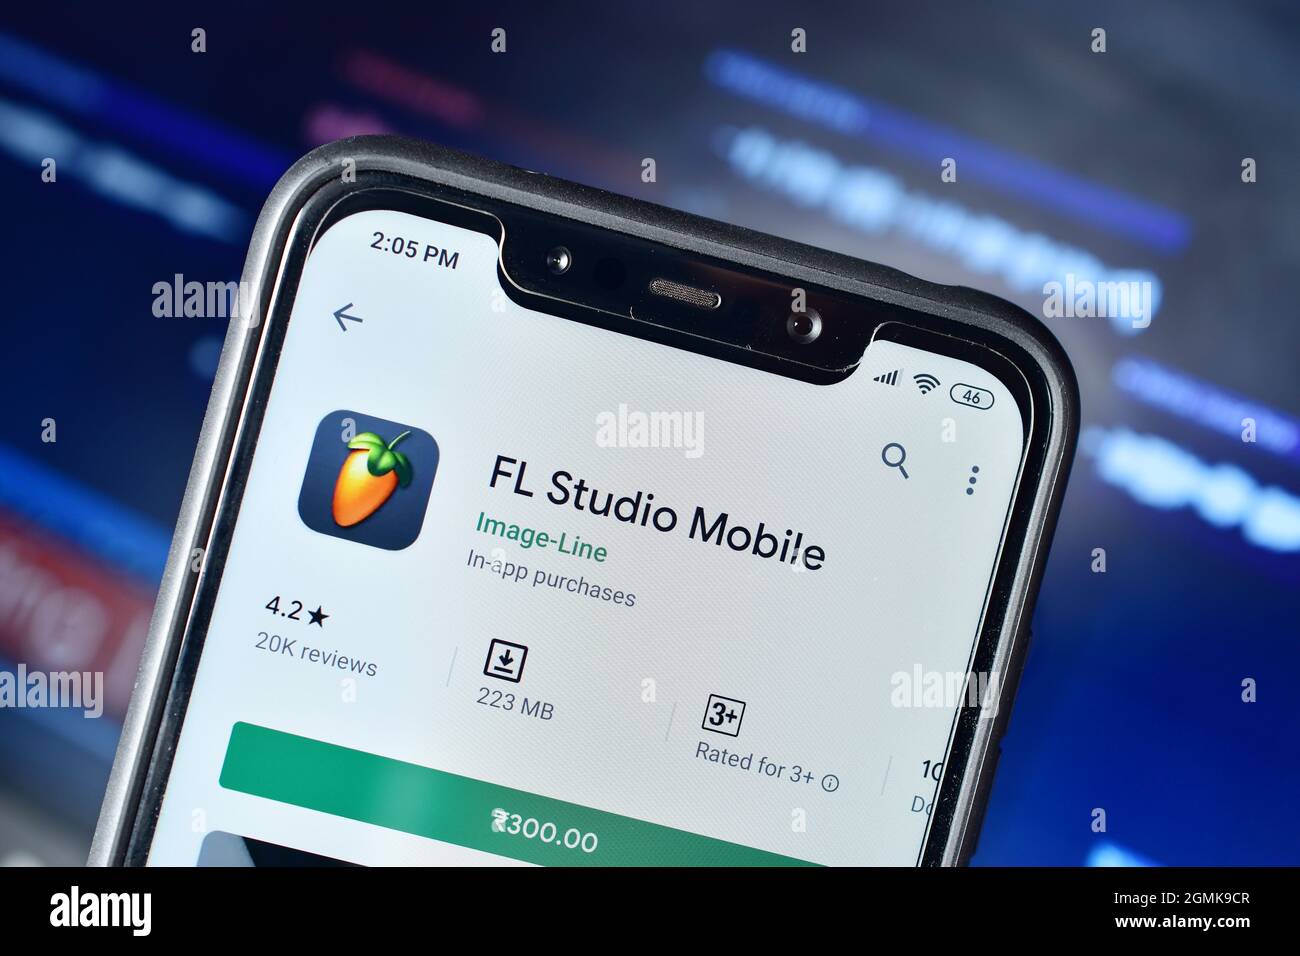 FL Studio Music on Phone, Music Making Software su smartphone Foto Stock